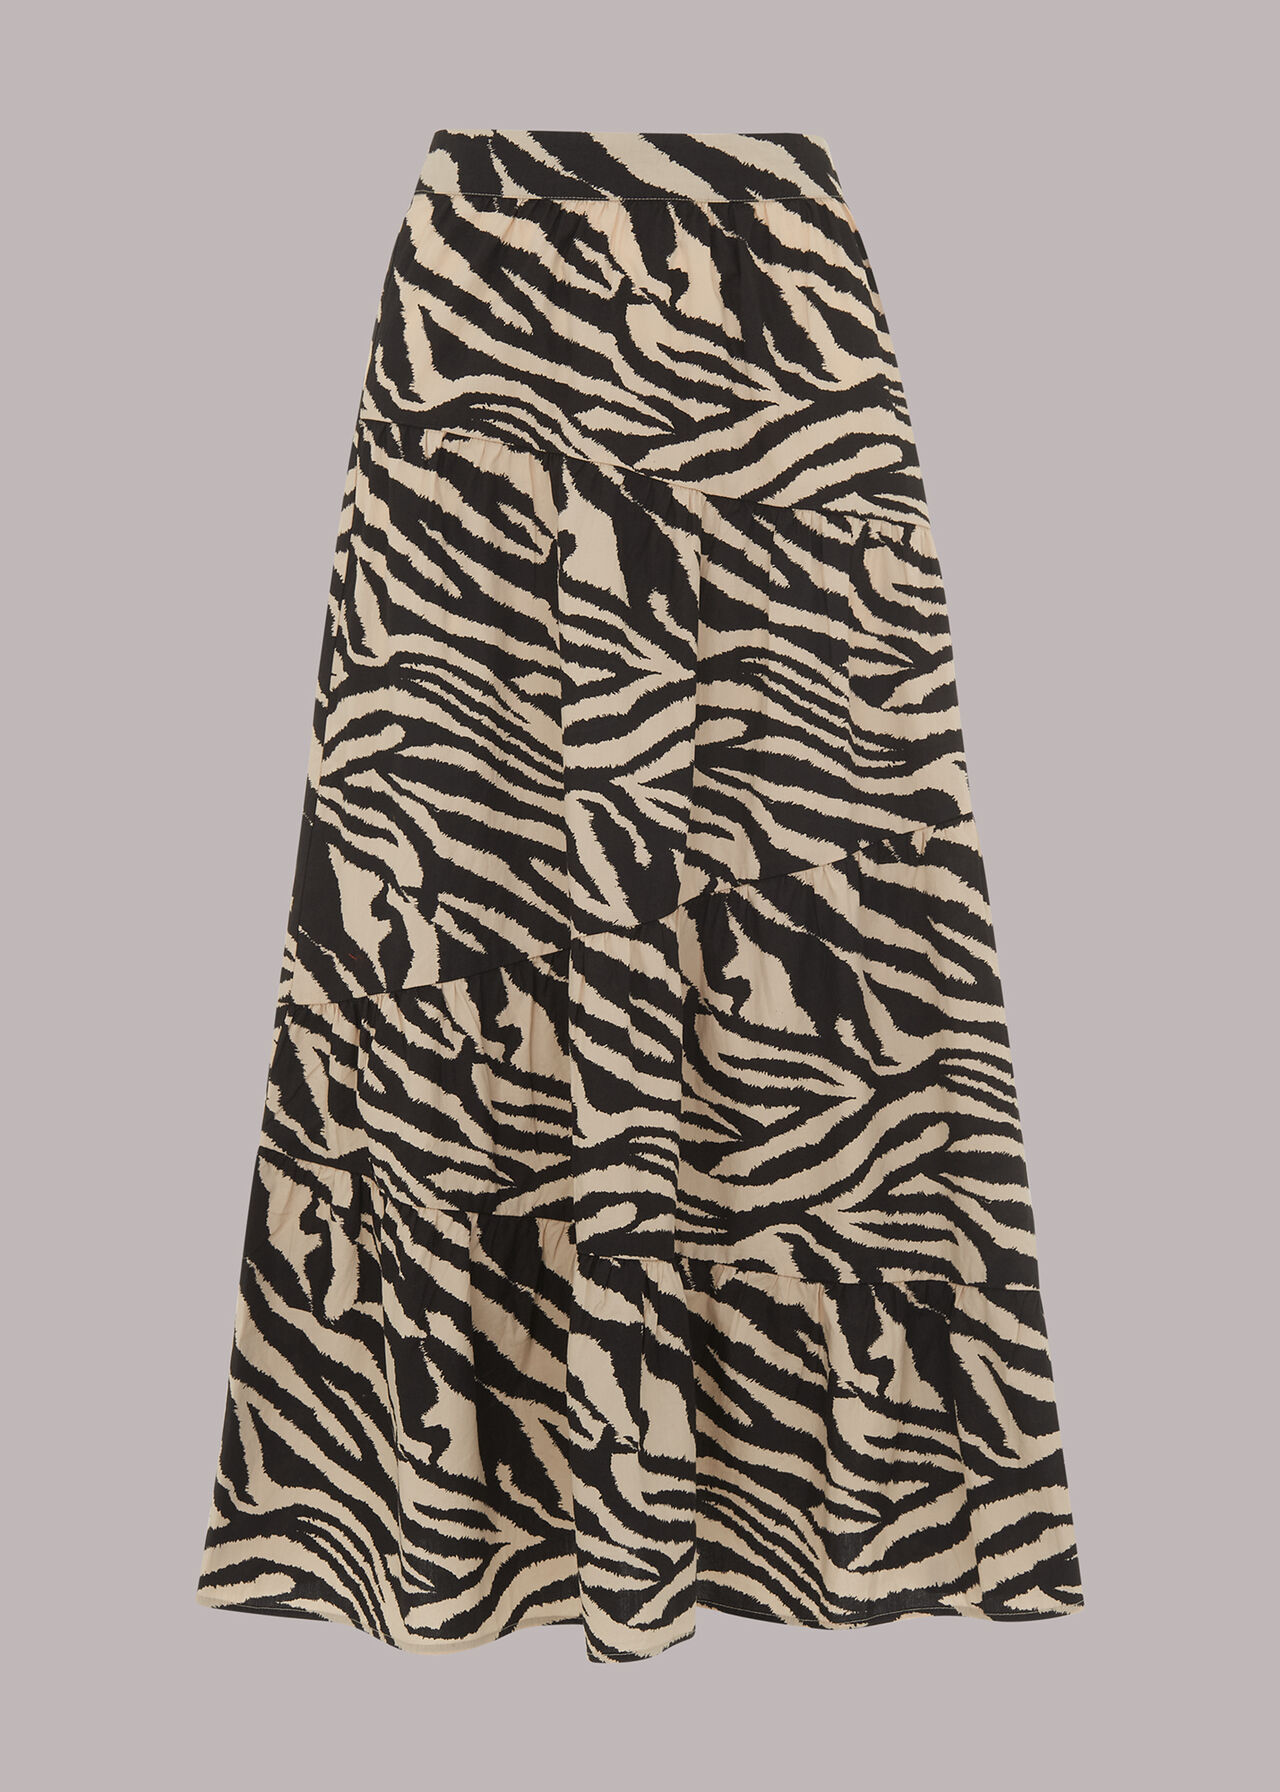 Mountain Zebra Tiered Skirt